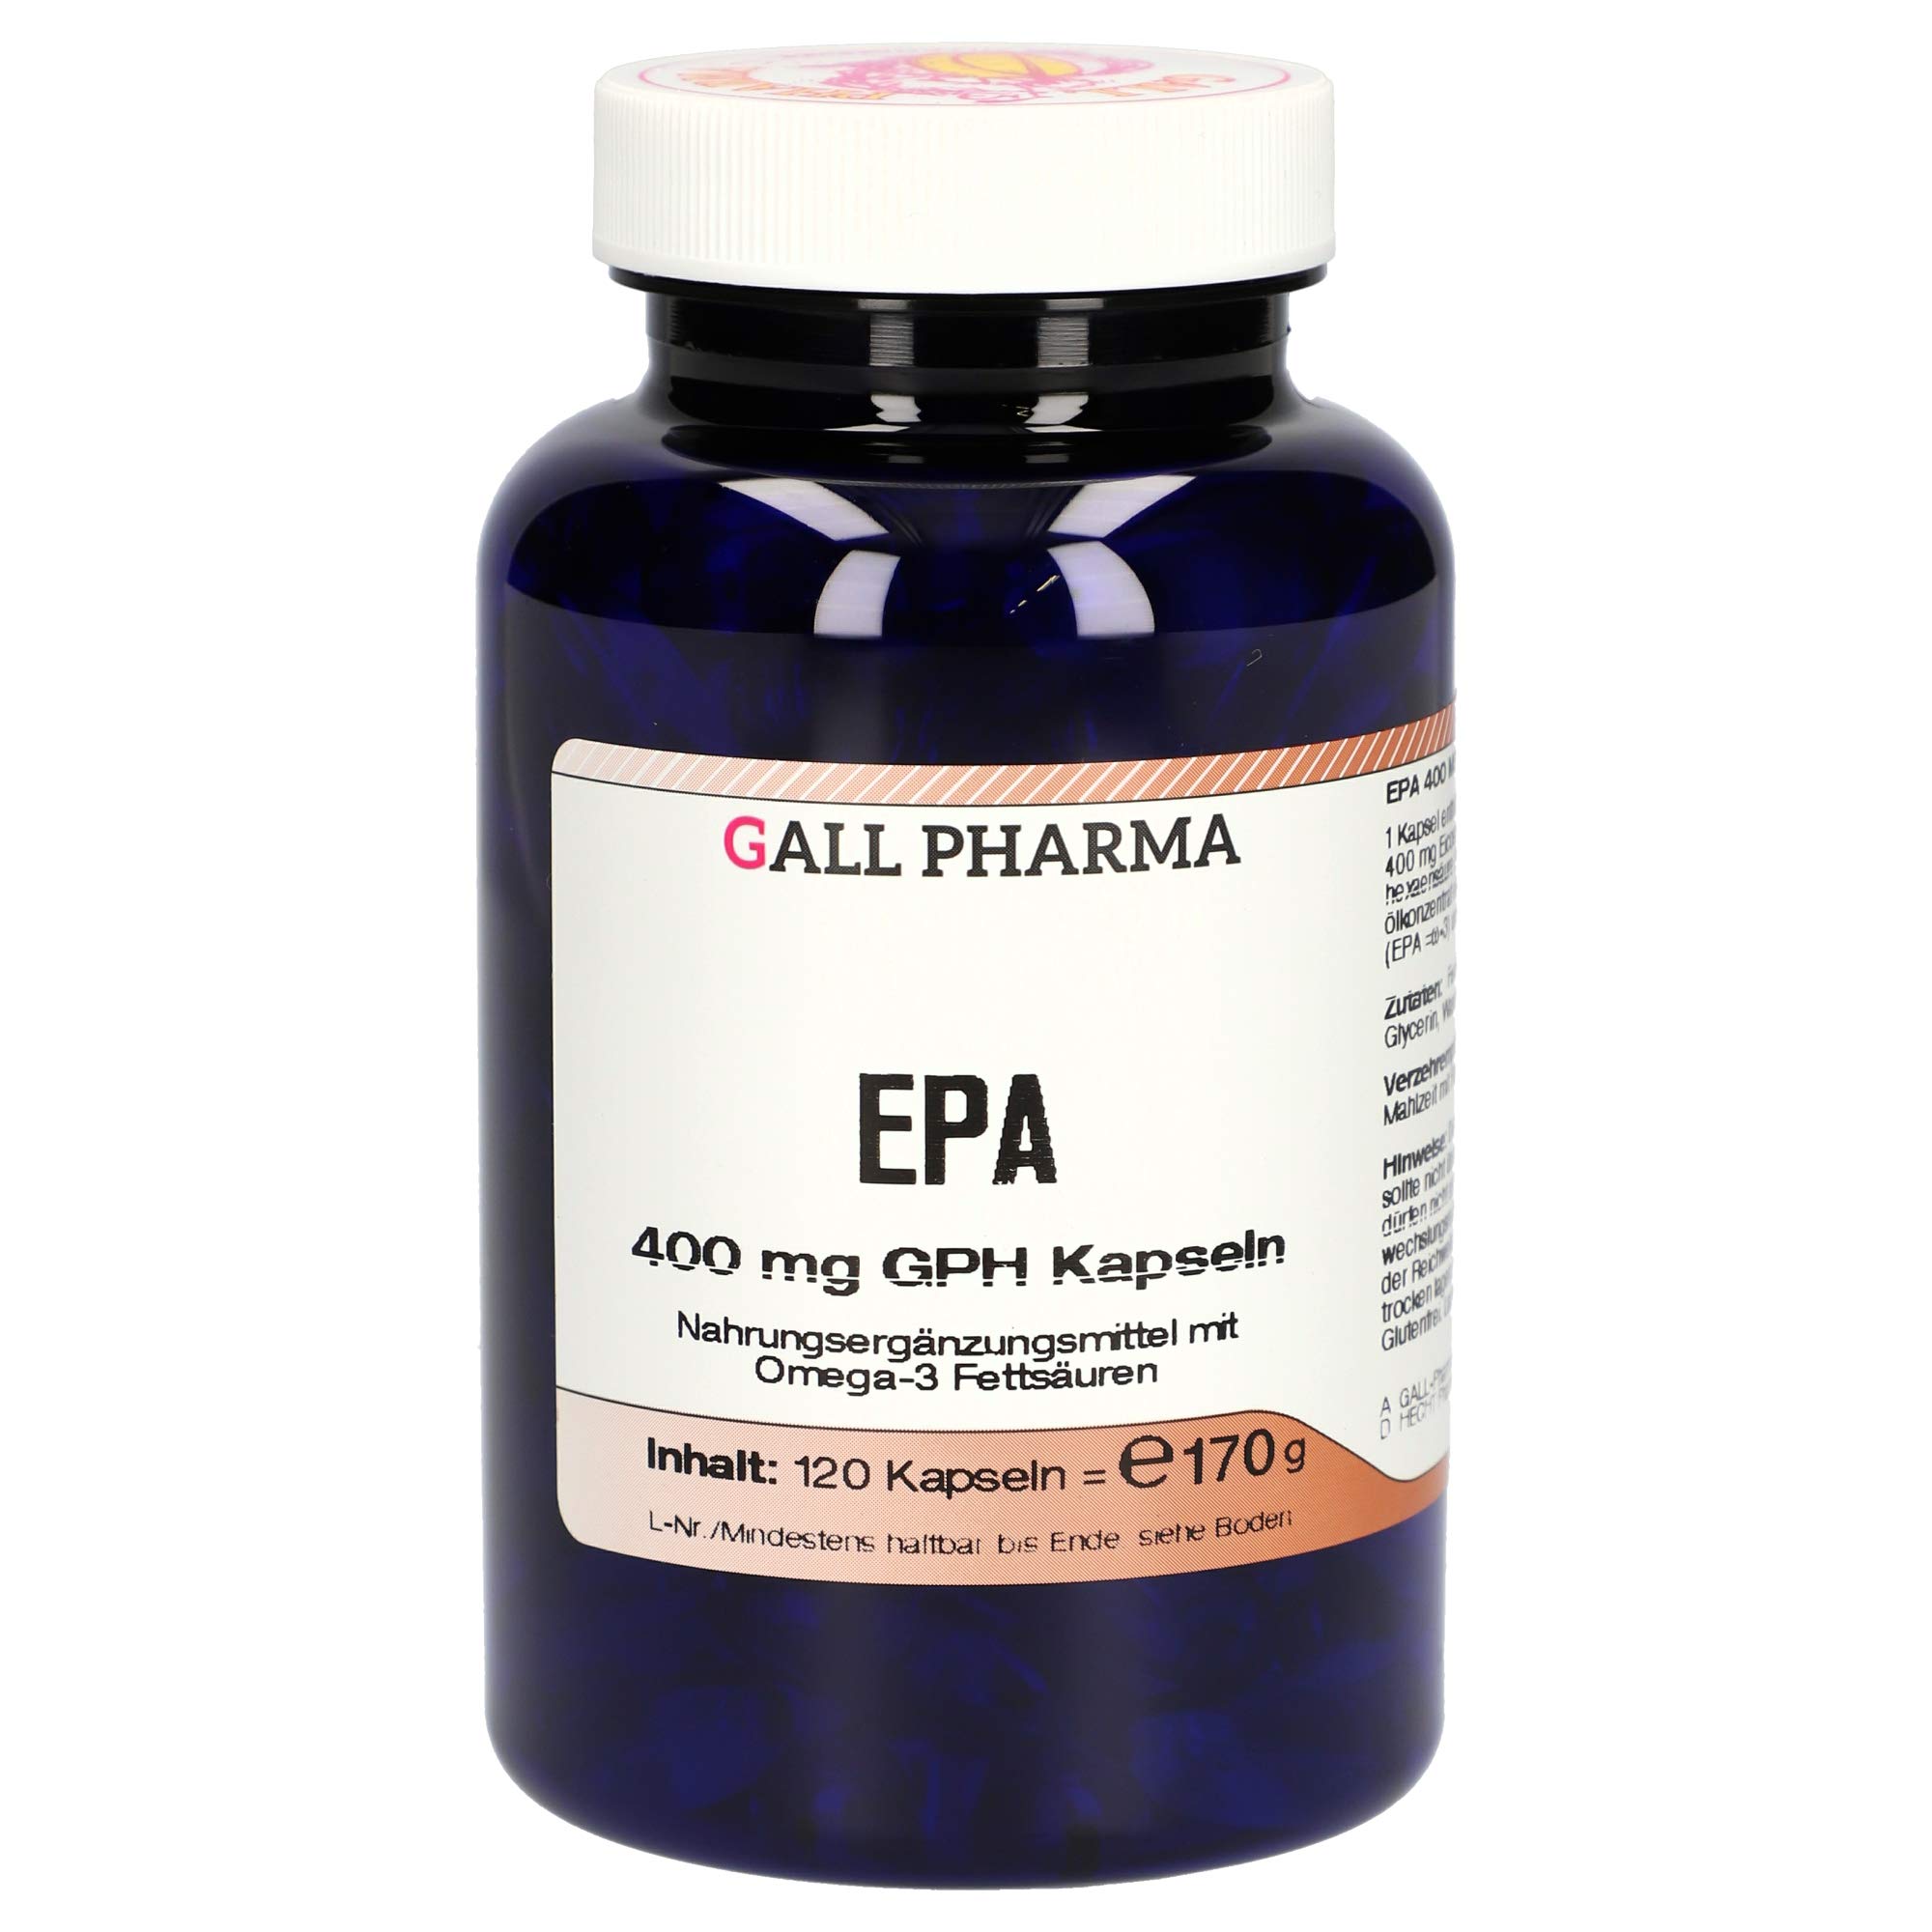 Gall Pharma EPA 400 mg GPH Kapseln, 120 Kapseln